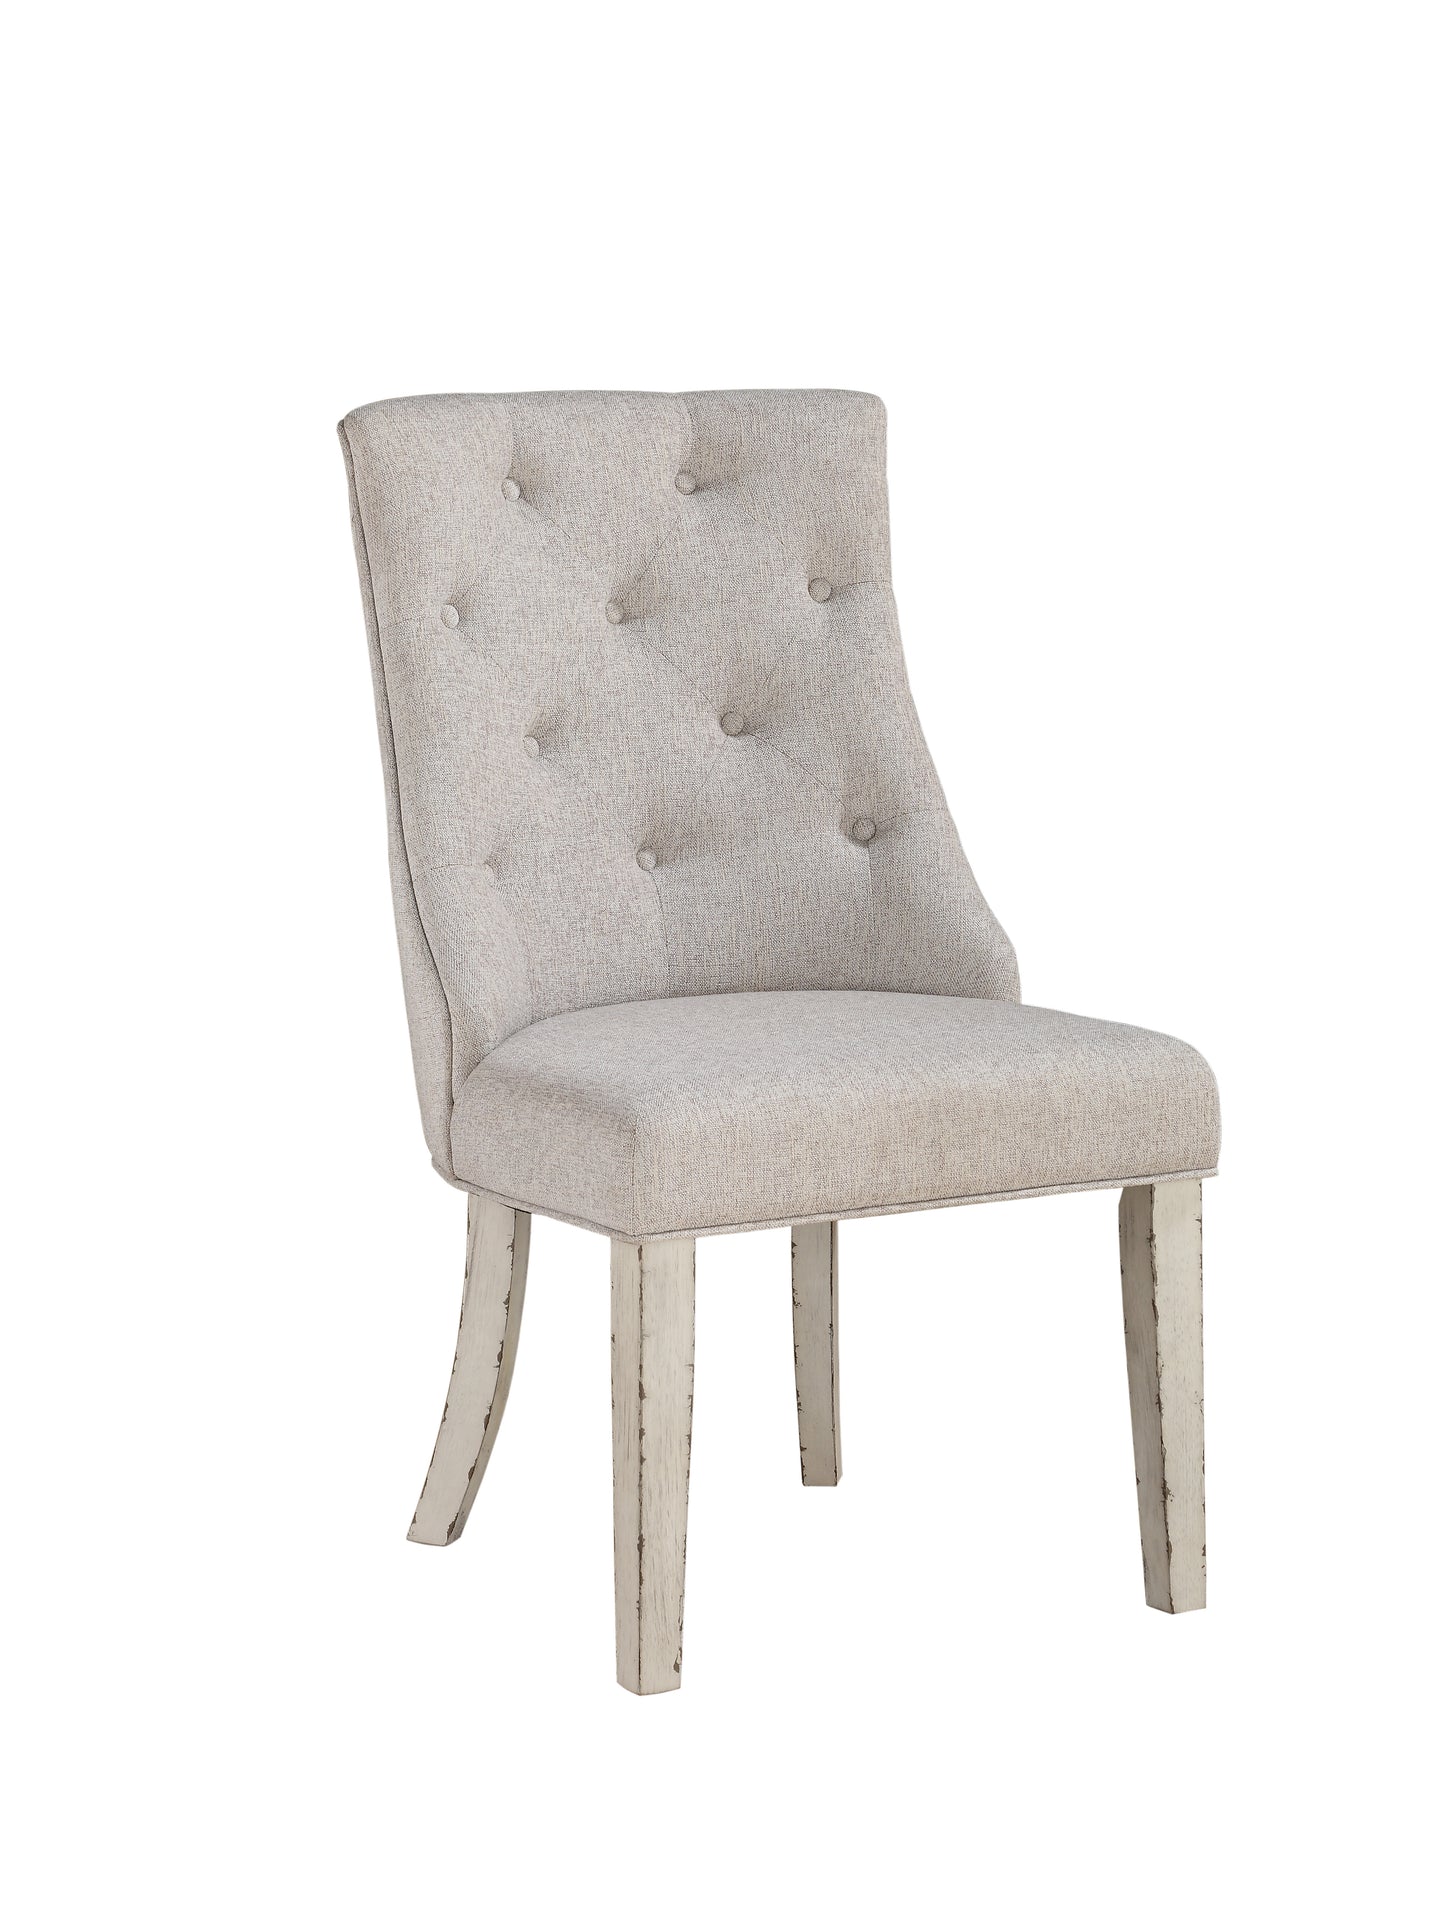 Katet Beige Linen & Antique White Arm Chair